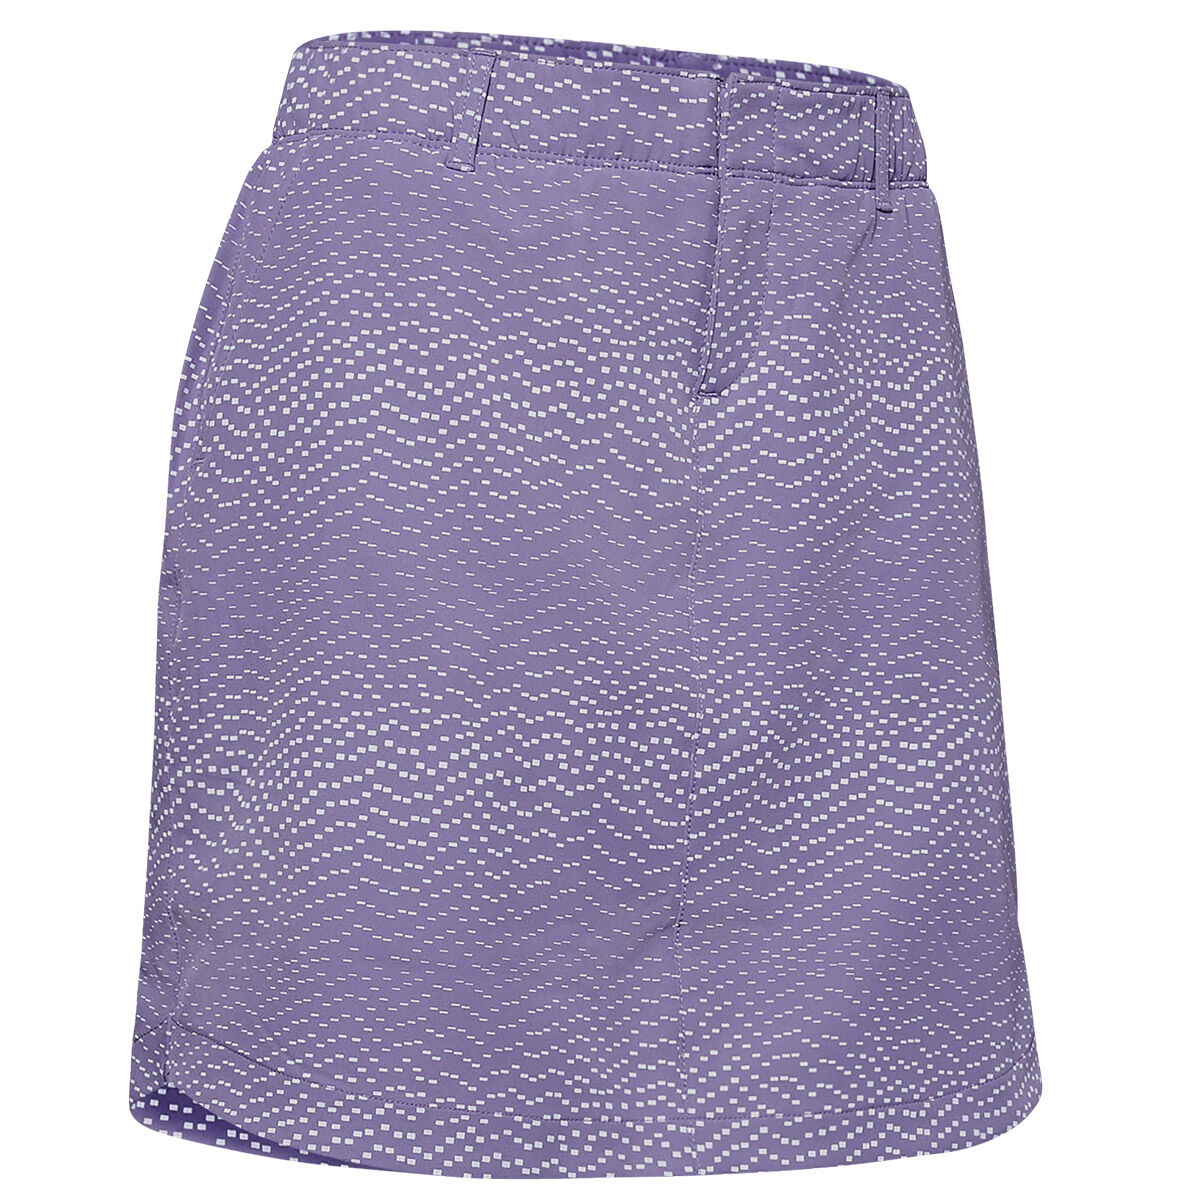 Jupe-Short Under Armour Links Printed Woven pour femmes, femme, 8, Purple luxe/purple luxe | Online 